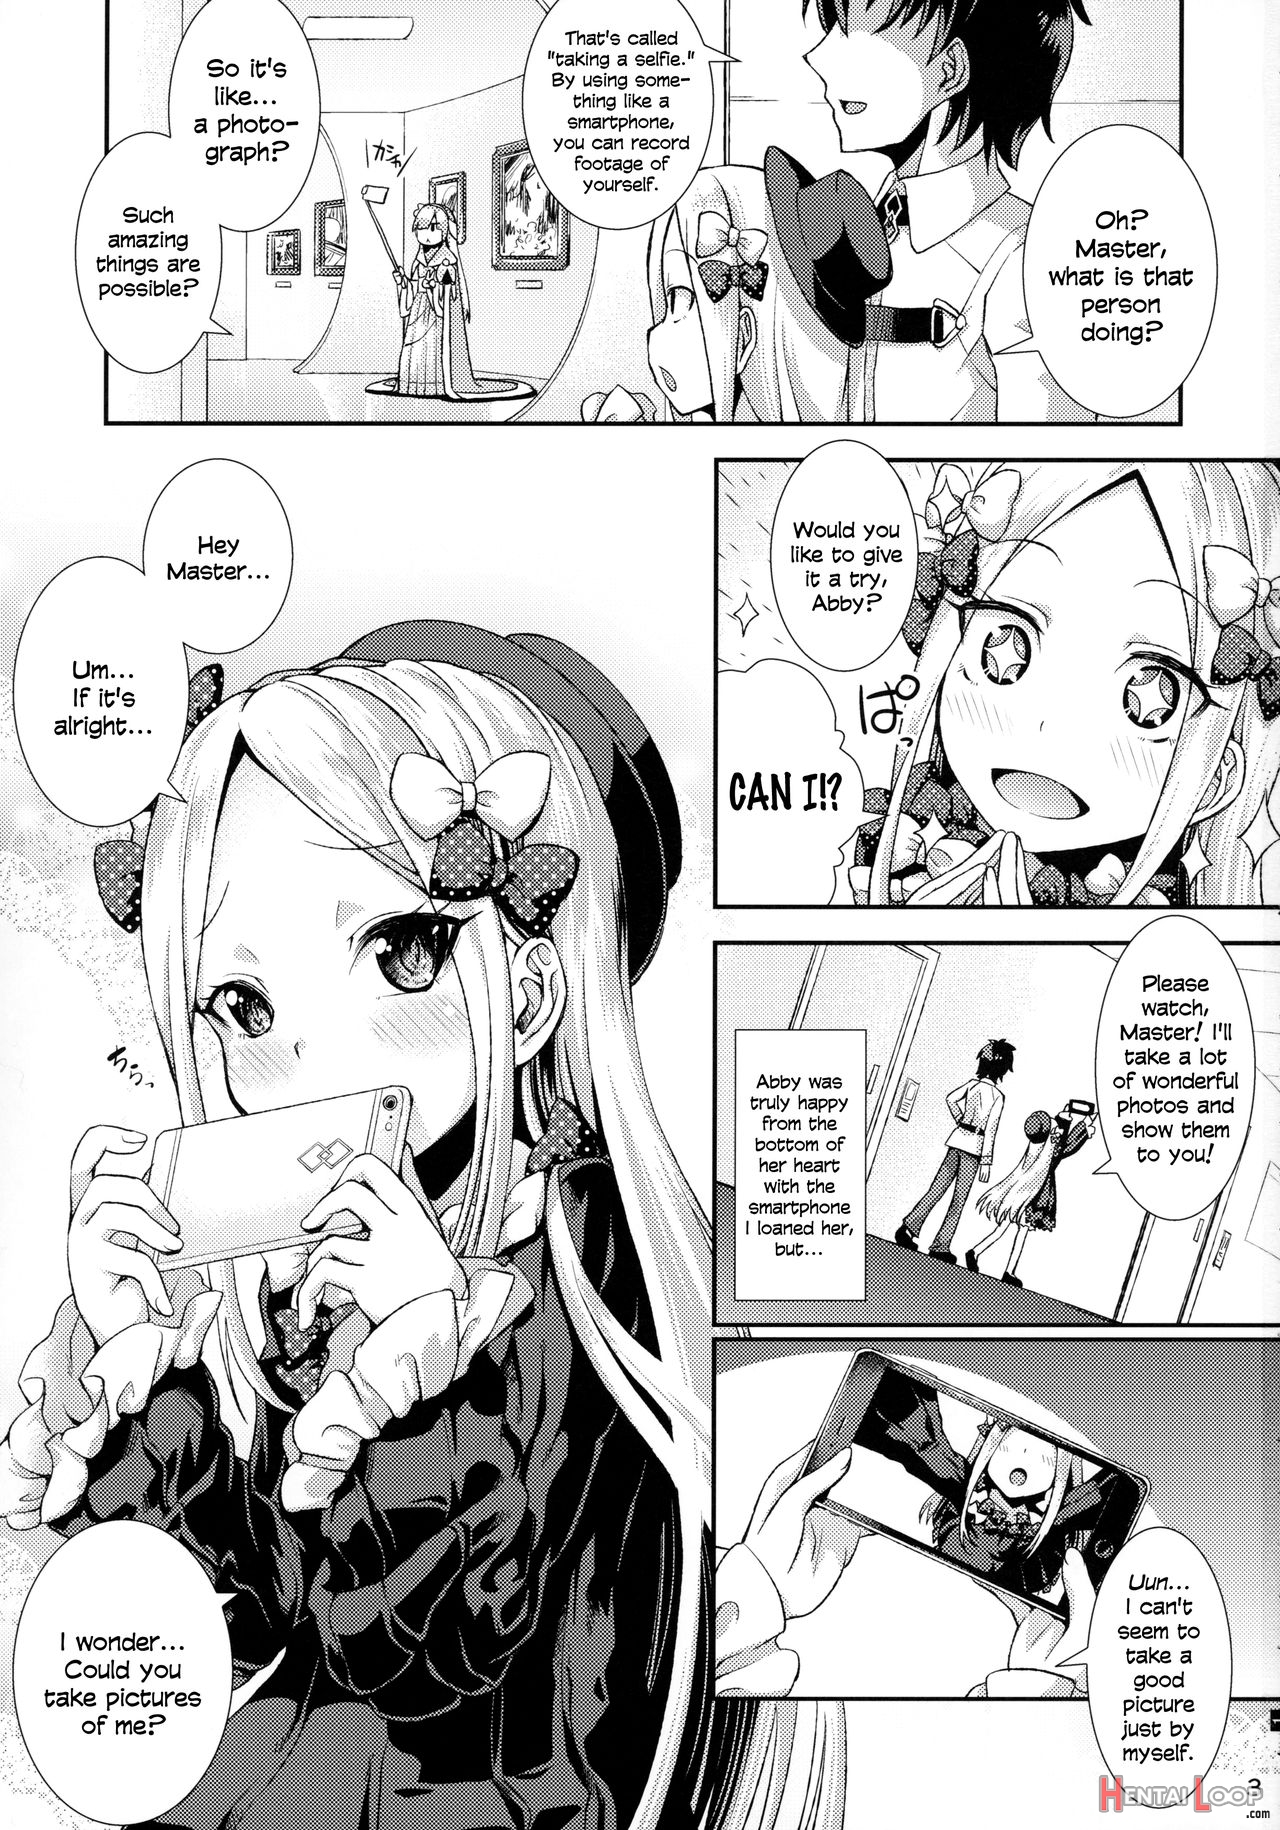 Page 2 of Abby And The Secret Homemade Sex Tape (by Yamazaki Kana)